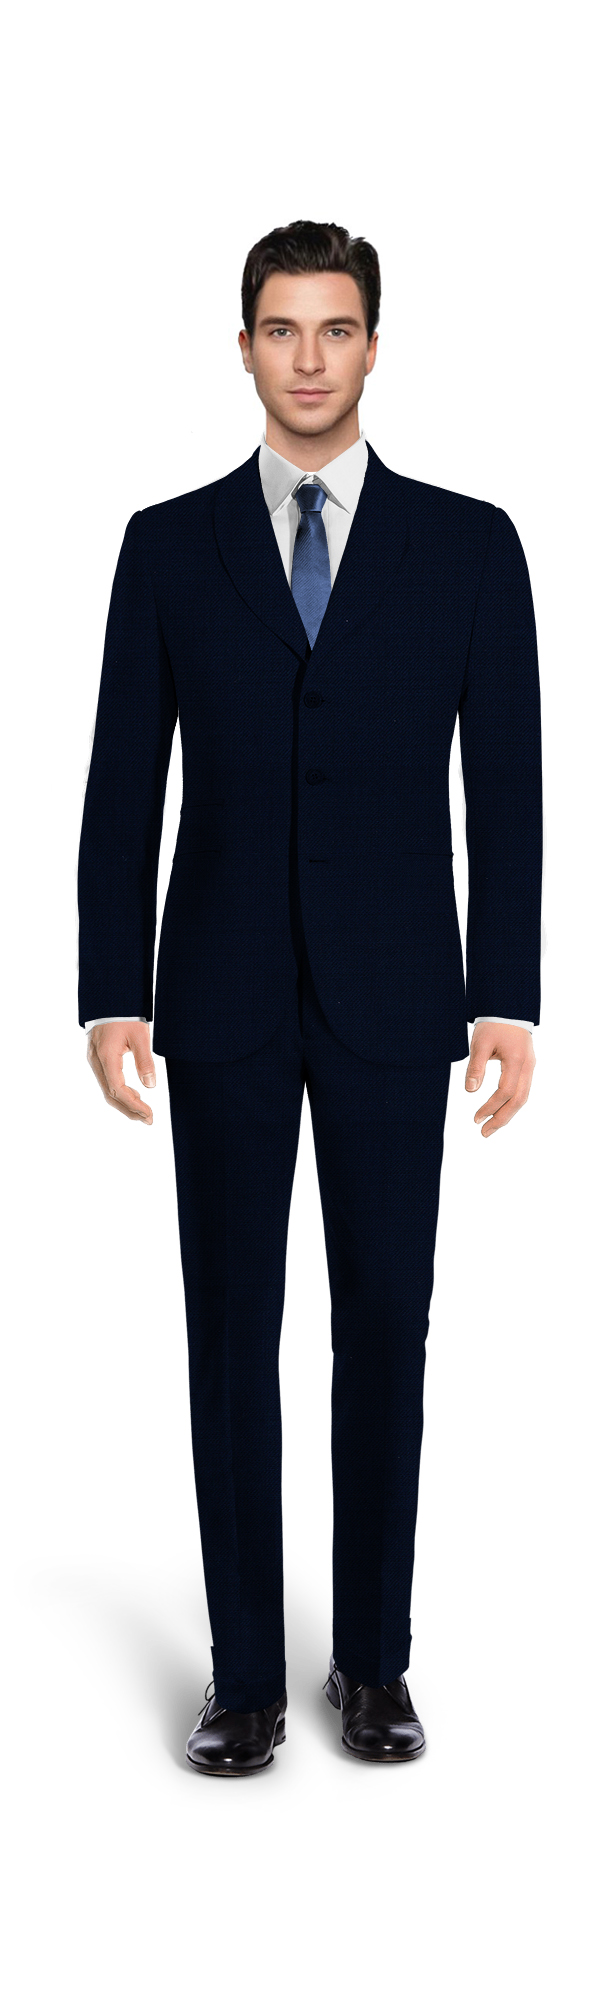 411 - A DONG SILK I Best Online Custom Made Suits